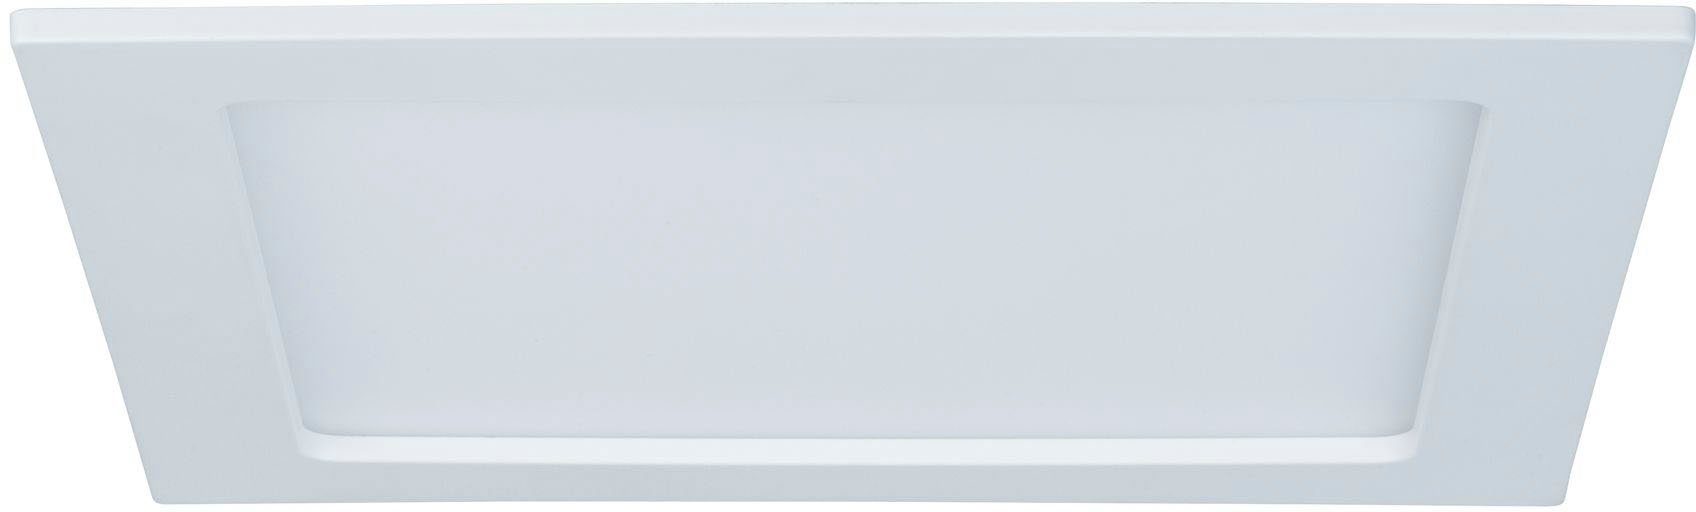 Paulmann LED Deckenleuchte, LED integriert, Panel Dimmbar Neutralweiß, spritzwassergeschützt fest 9W IP44 Badleuchte Weiß eckig